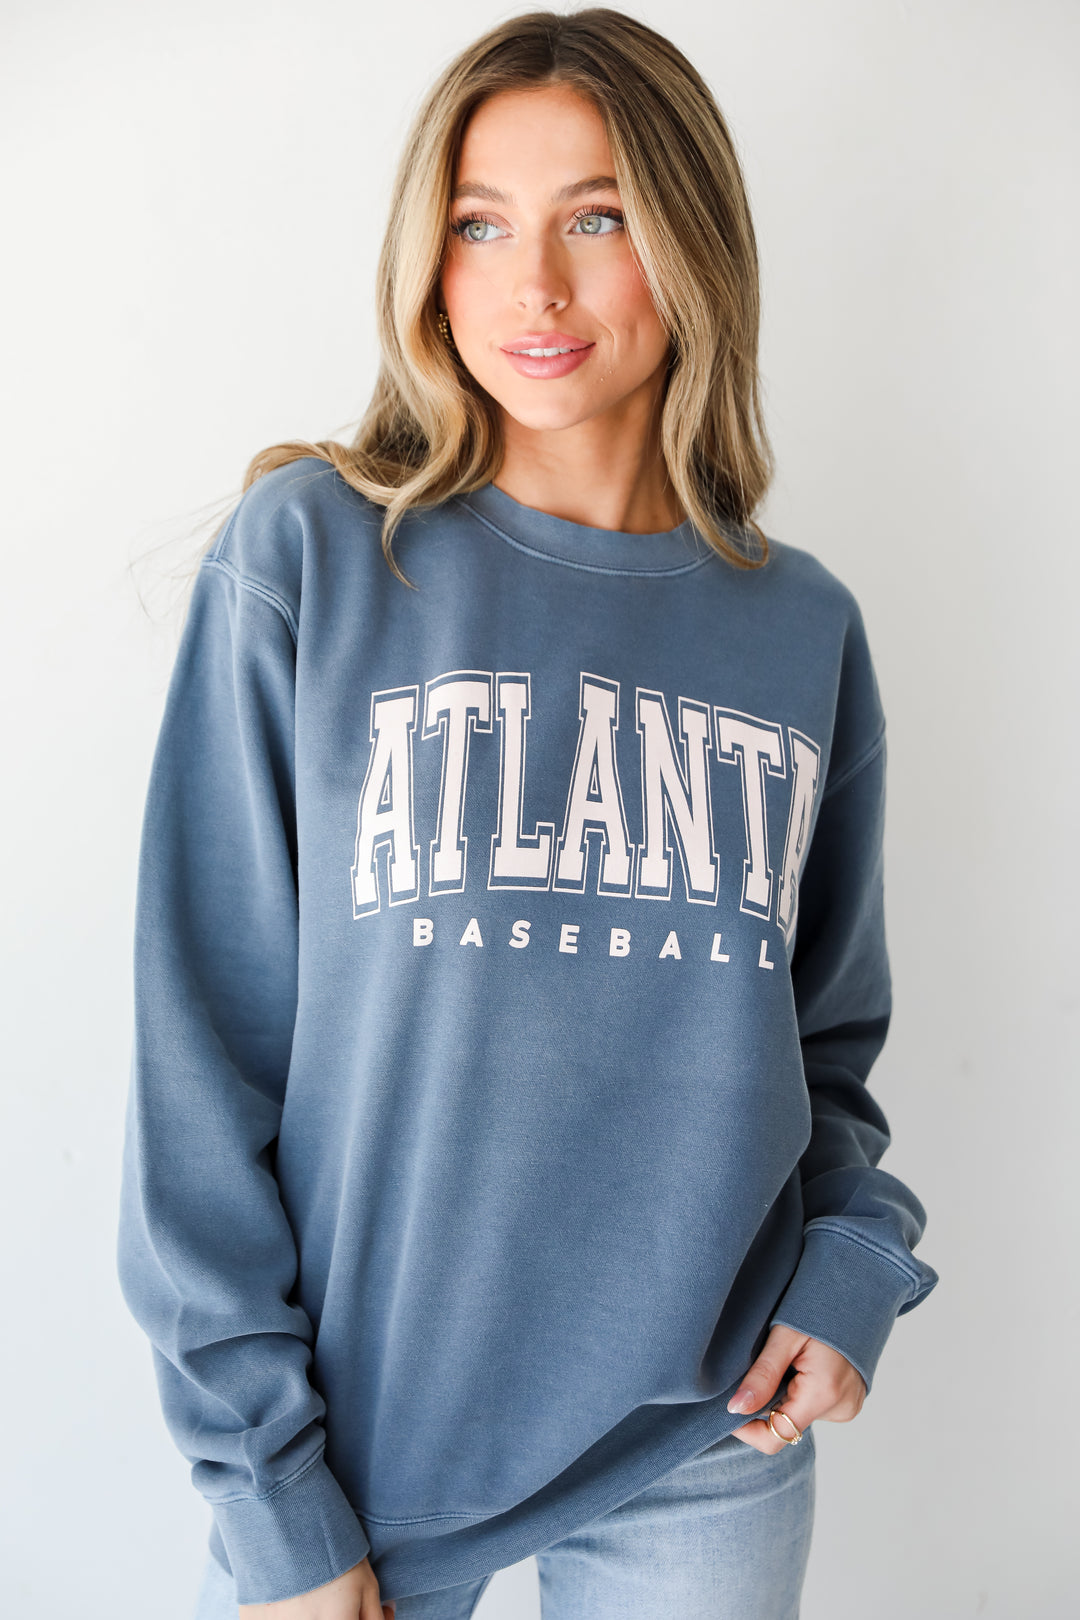 Denim Atlanta Baseball Block Letter Pullover. Braves Sweatshirt. Braves Game Day Outfit. Comfy Sports Sweatshirt 